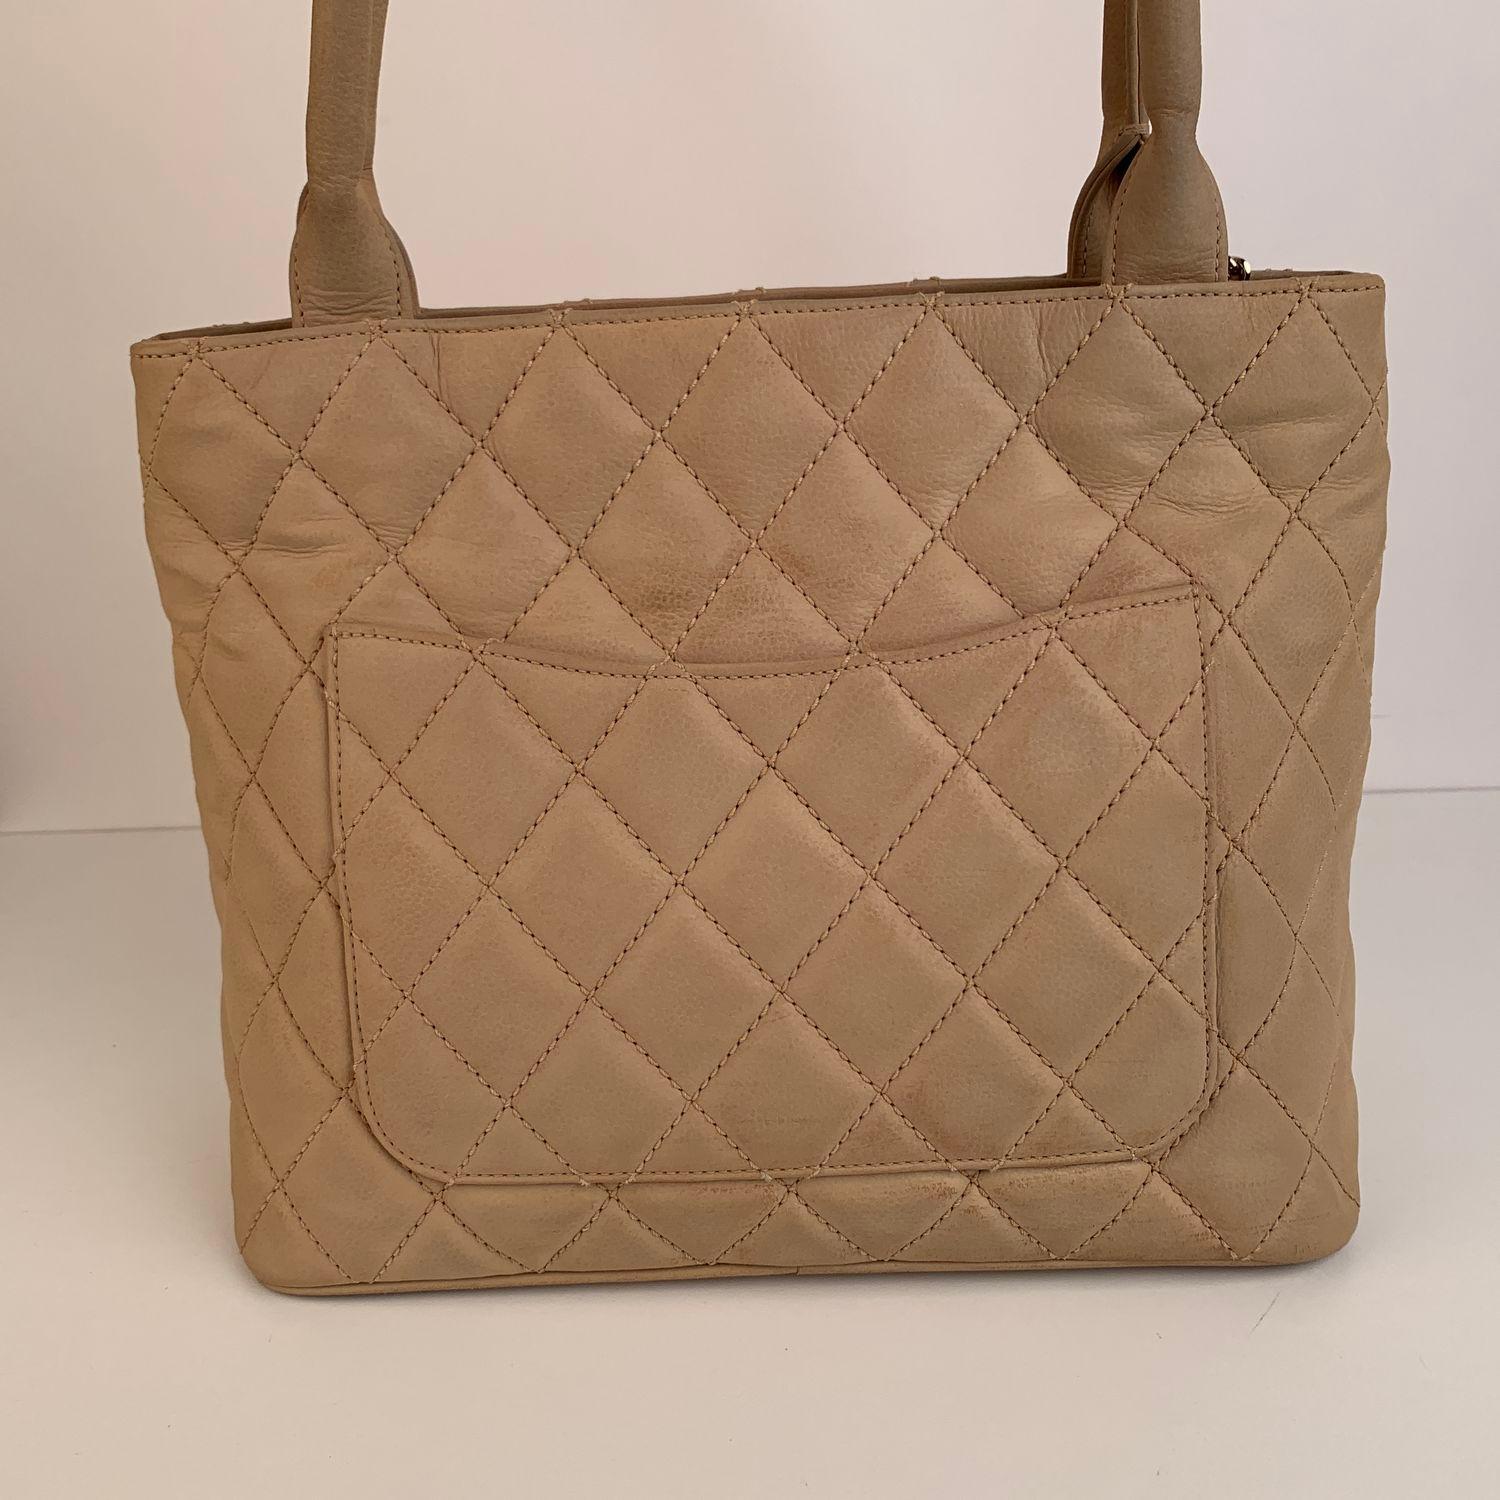 Chanel Beige Quilted Leather CC Logo Tote Shoulder Bag 4